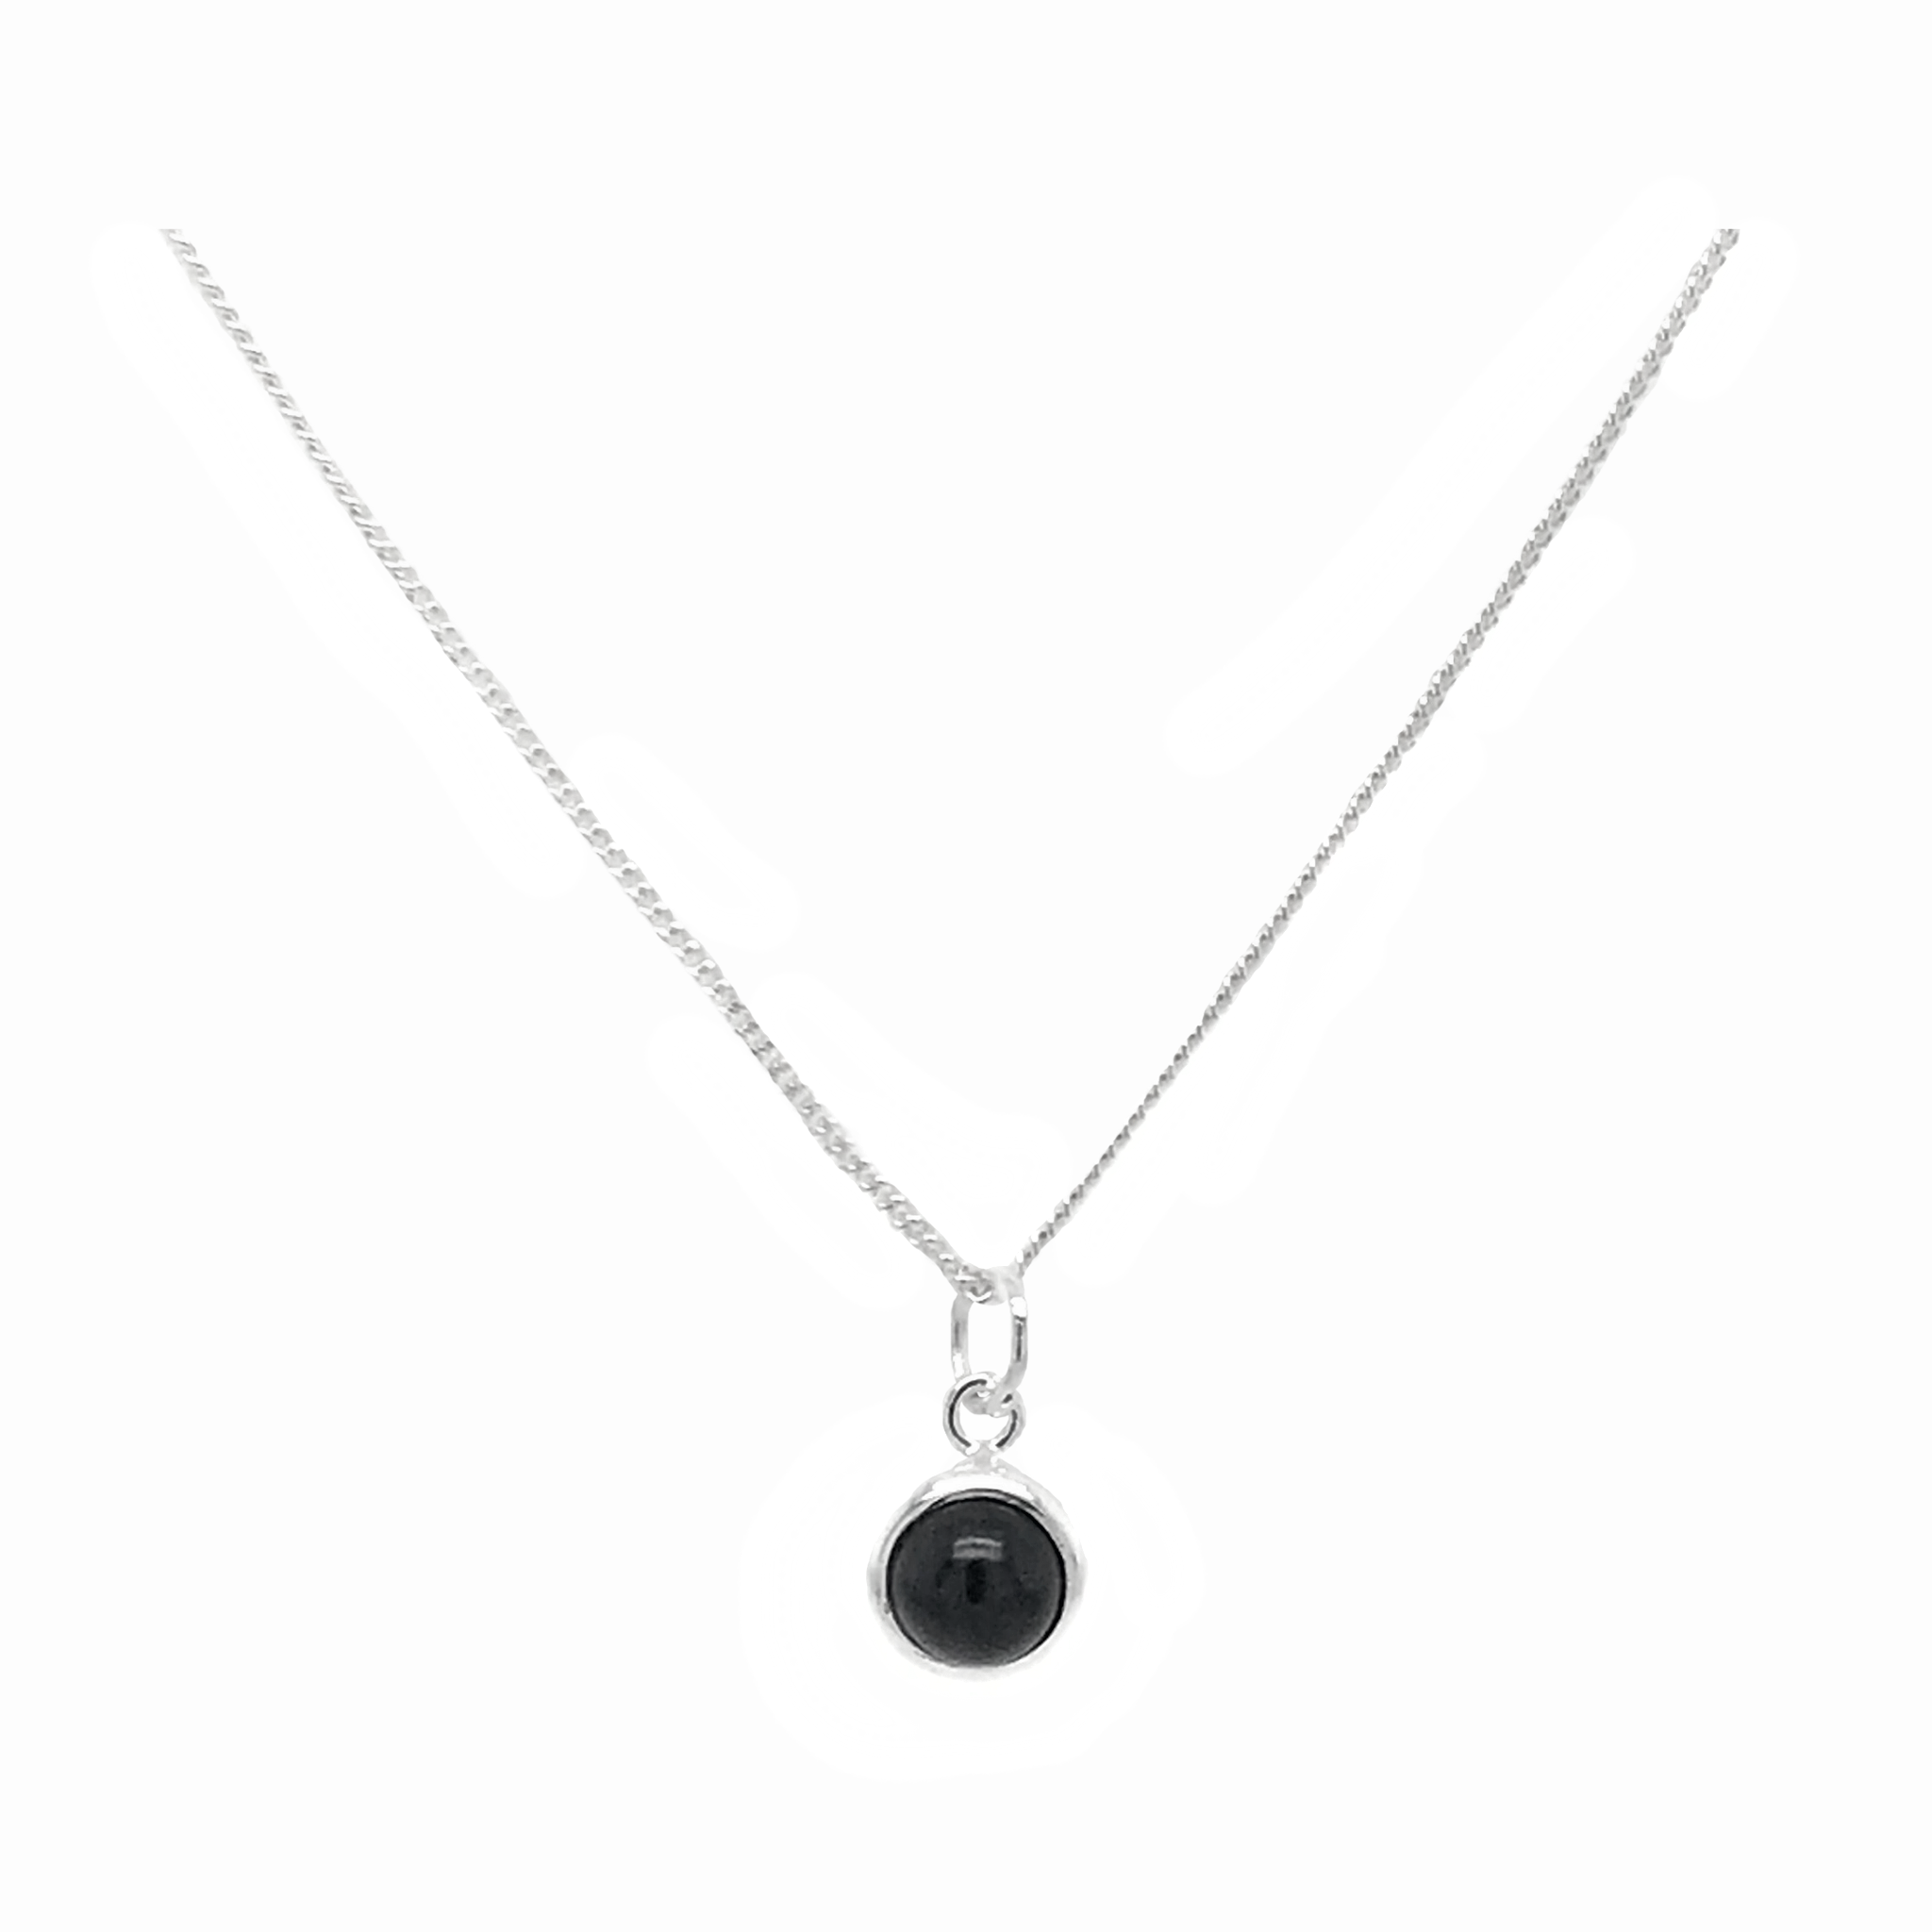 Silver Round Black Onyx Pendant on Chain